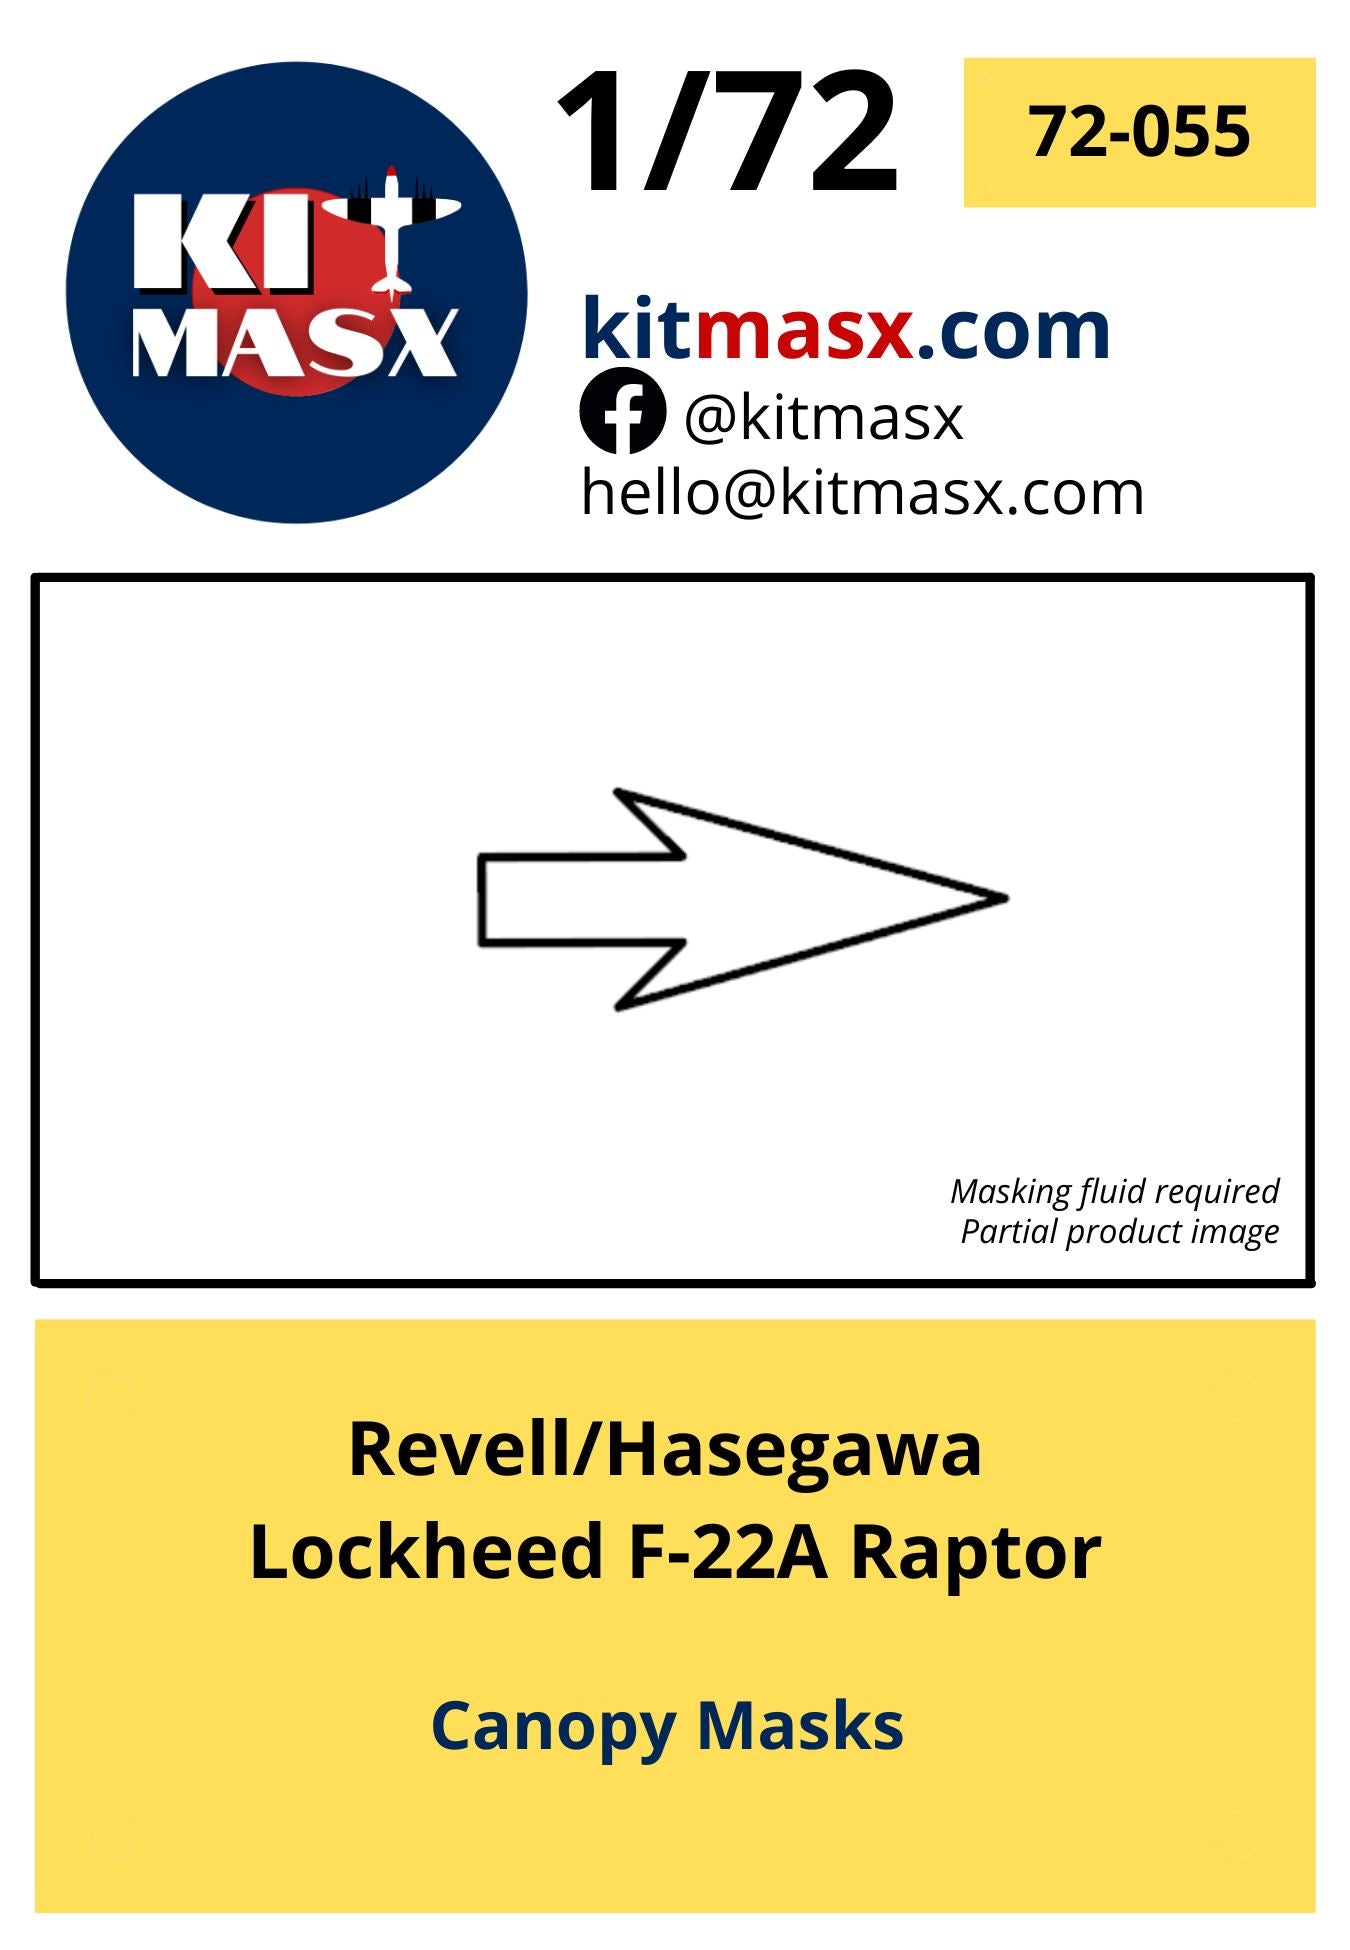 Revell/Hasegawa Lockheed F-22A Raptor Scale Model Accessories Kit Masx 